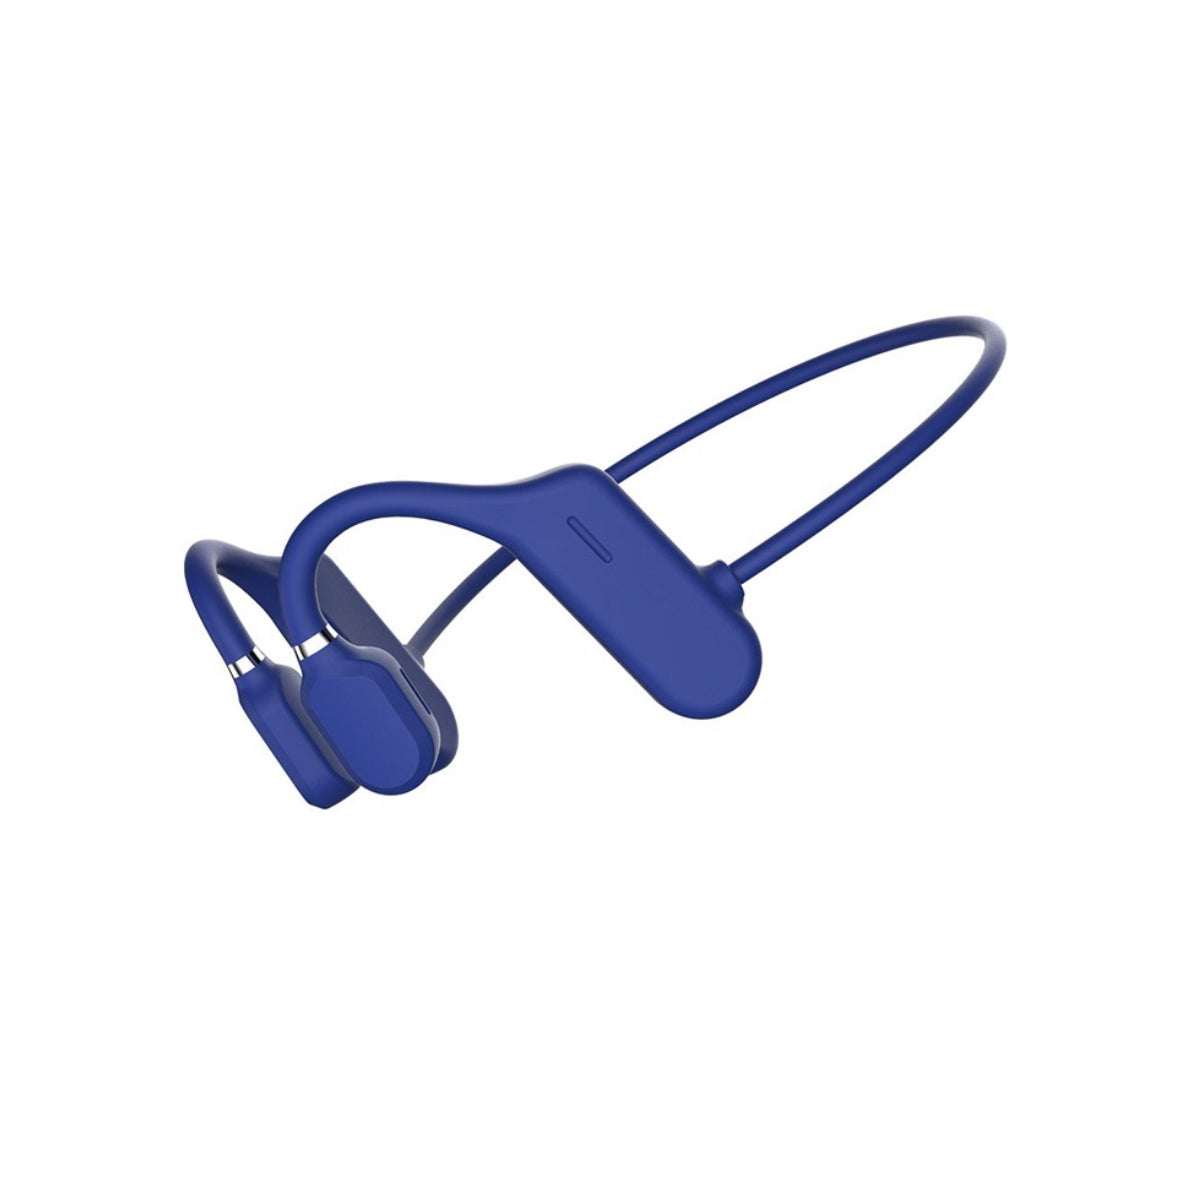 Open Ear Induction Stereo Wireless Headphones by VistaShops